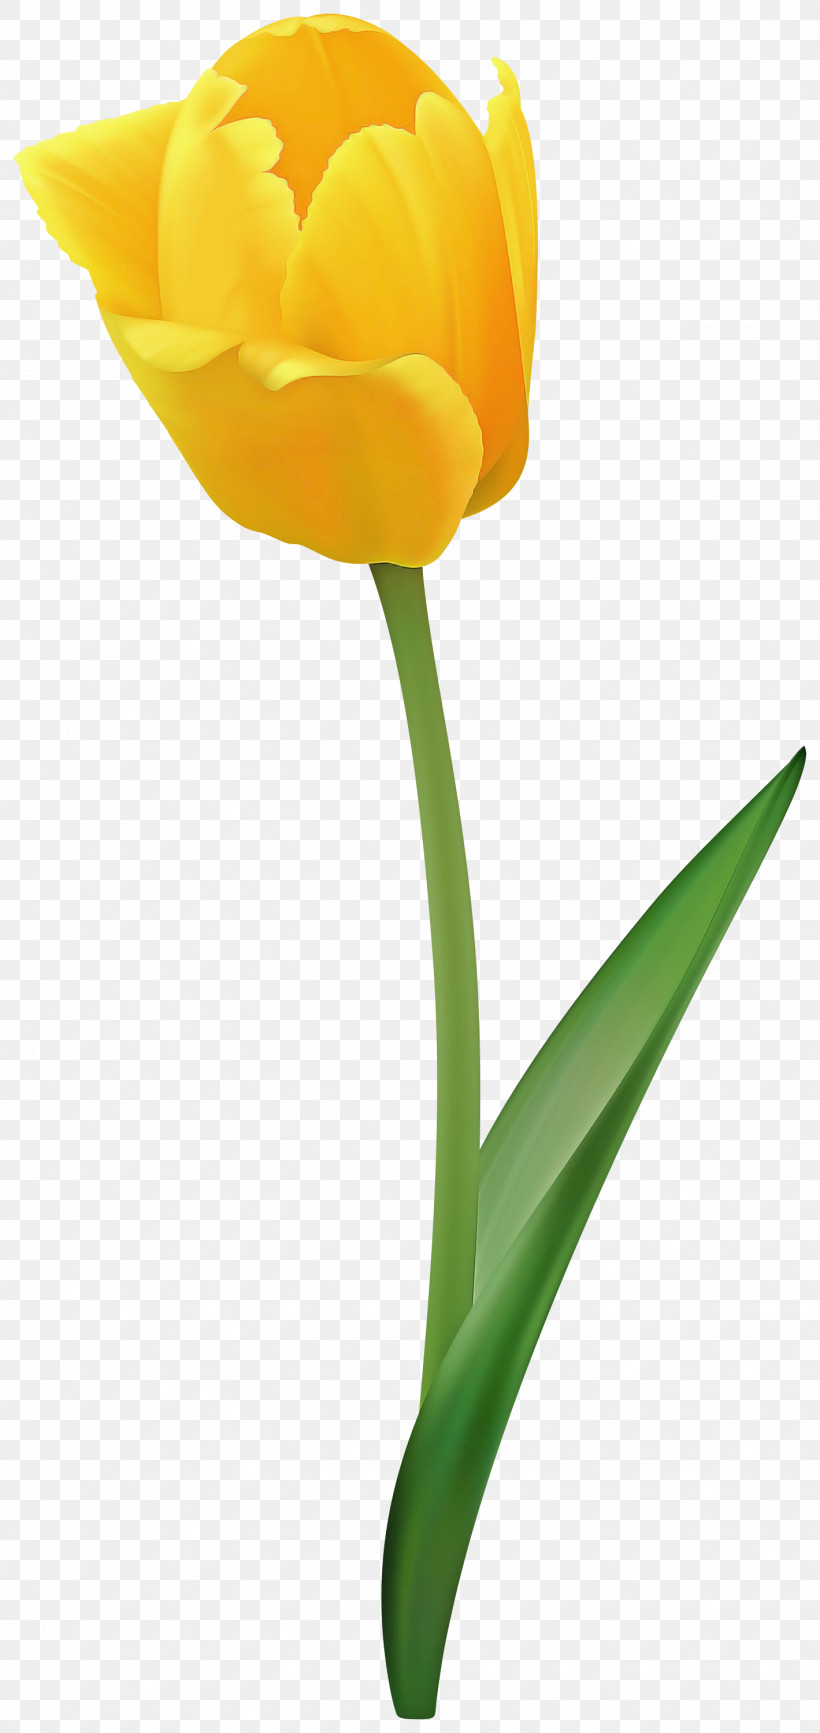 Flower Tulip Yellow Petal Cut Flowers, PNG, 1419x3000px, Flower, Cut Flowers, Pedicel, Petal, Plant Download Free